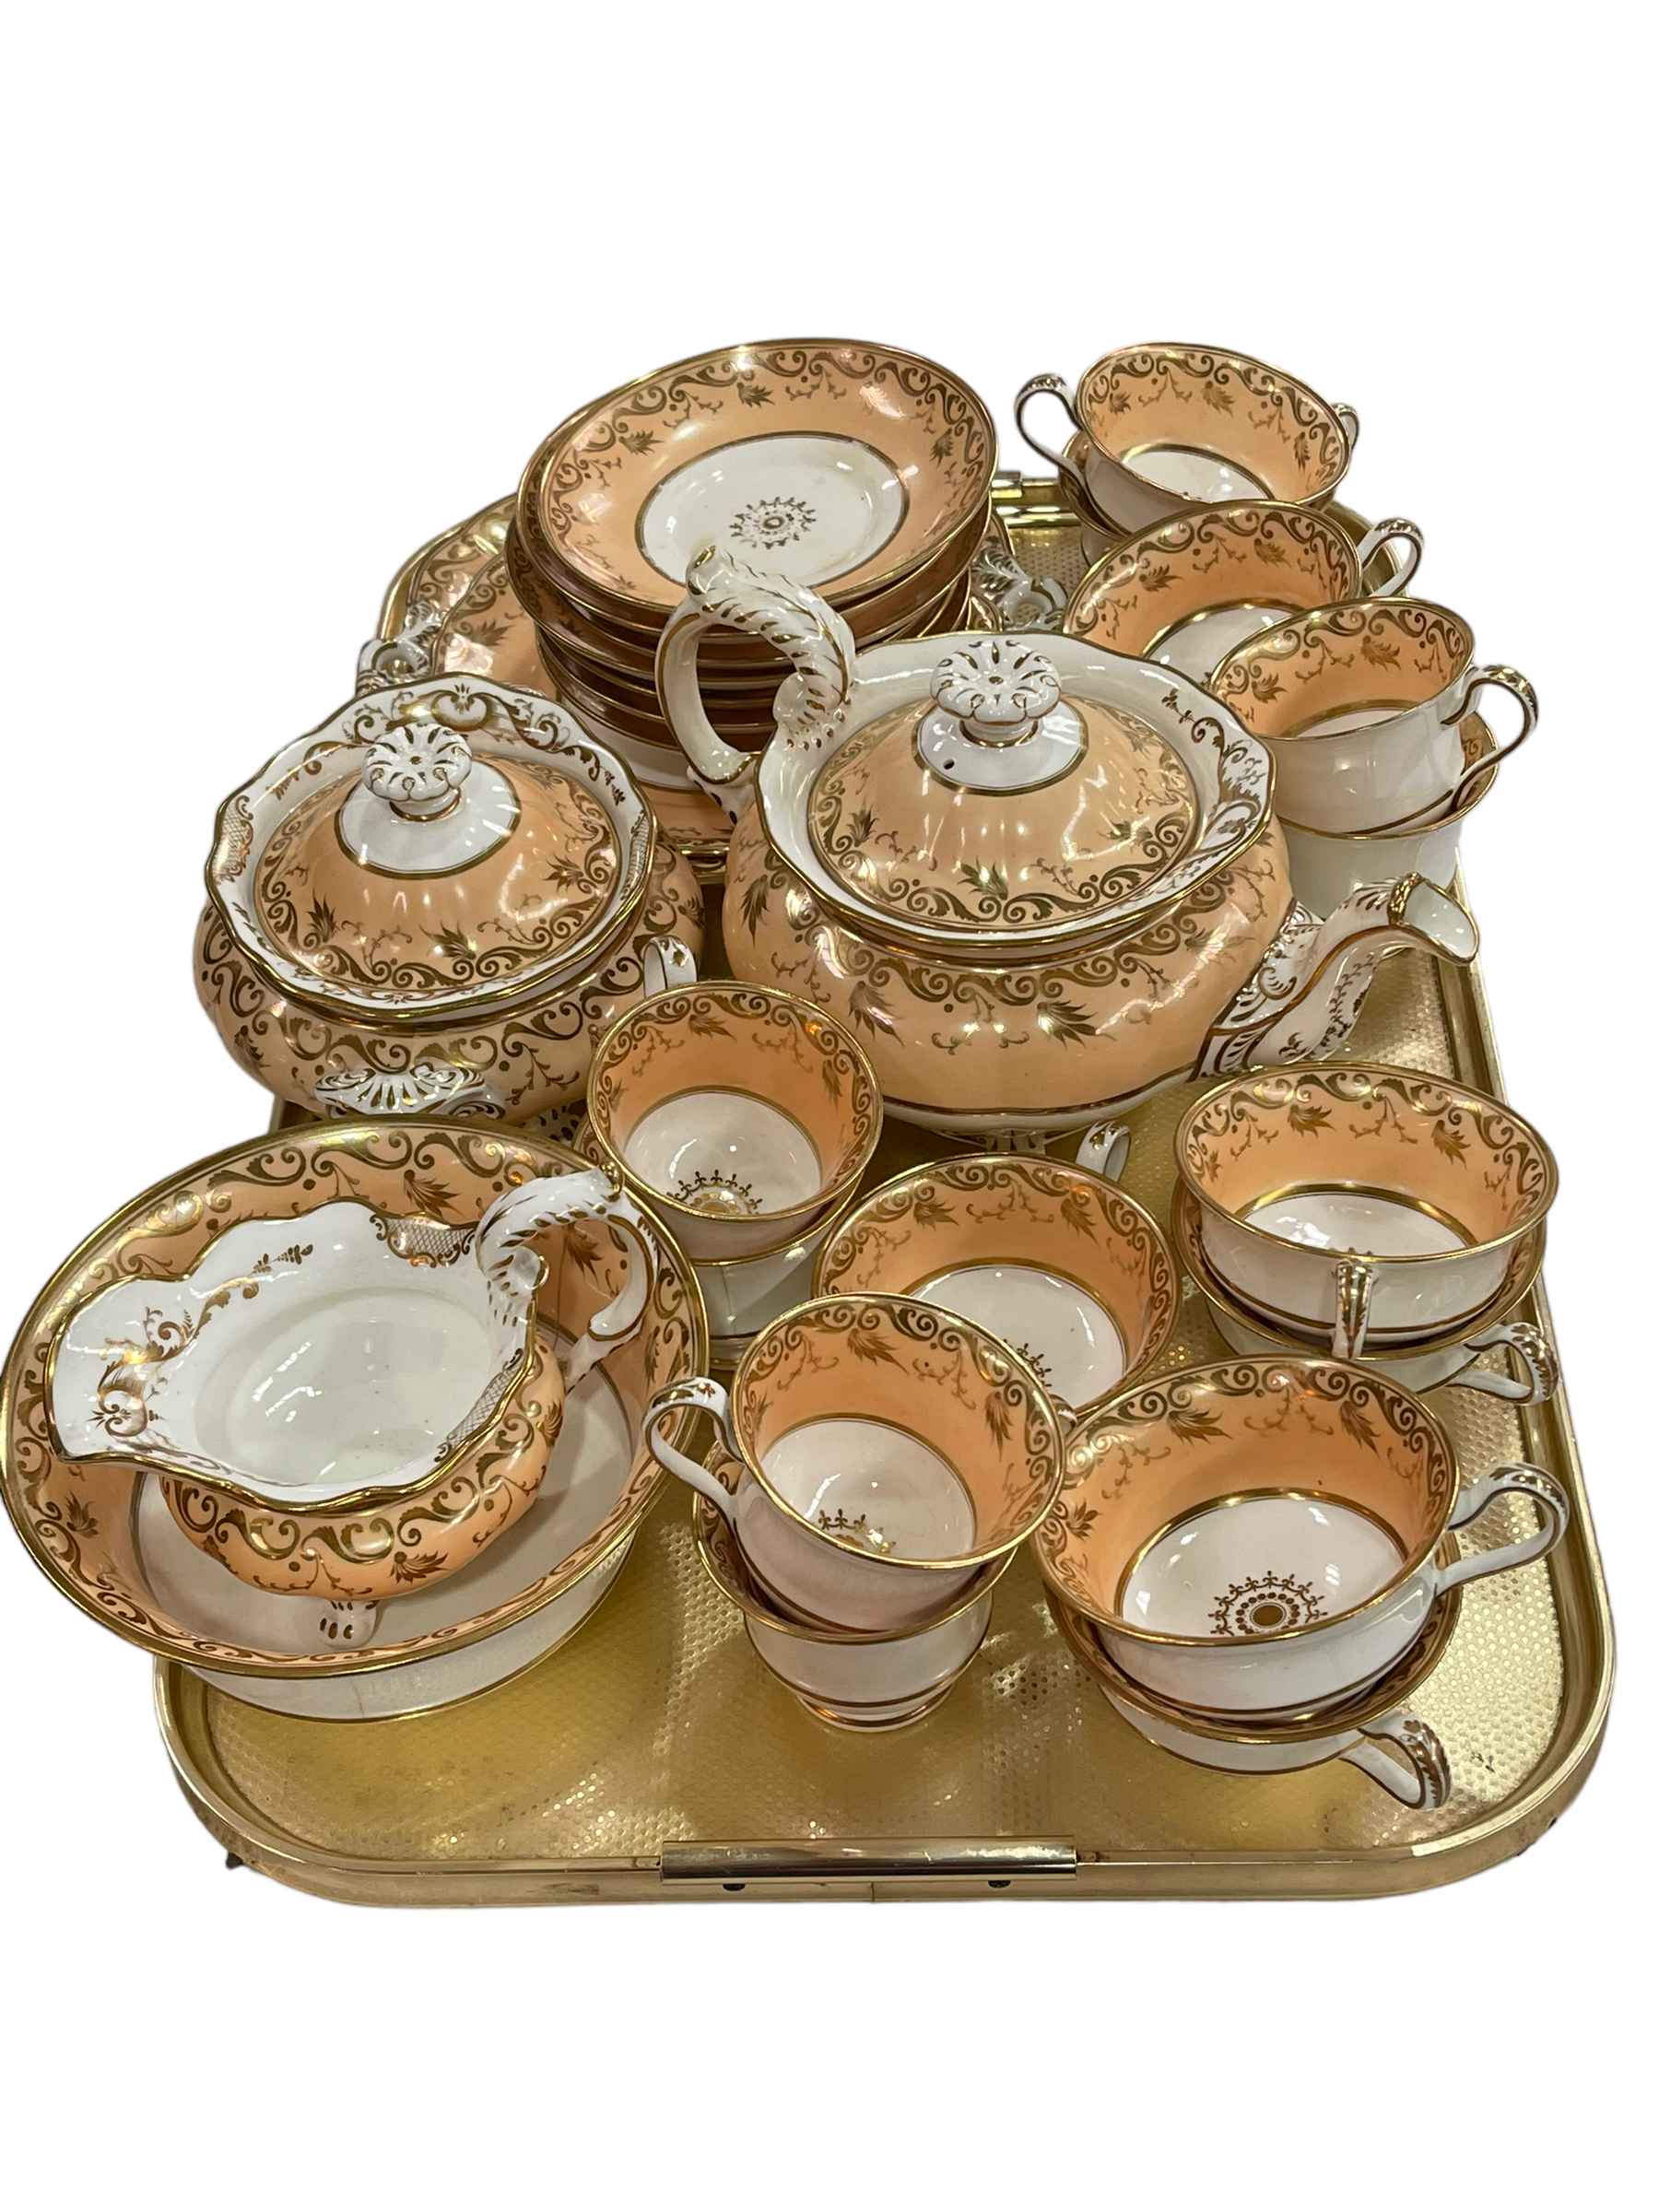 Victorian China Rockingham style tea set, 28 pieces including teapot.